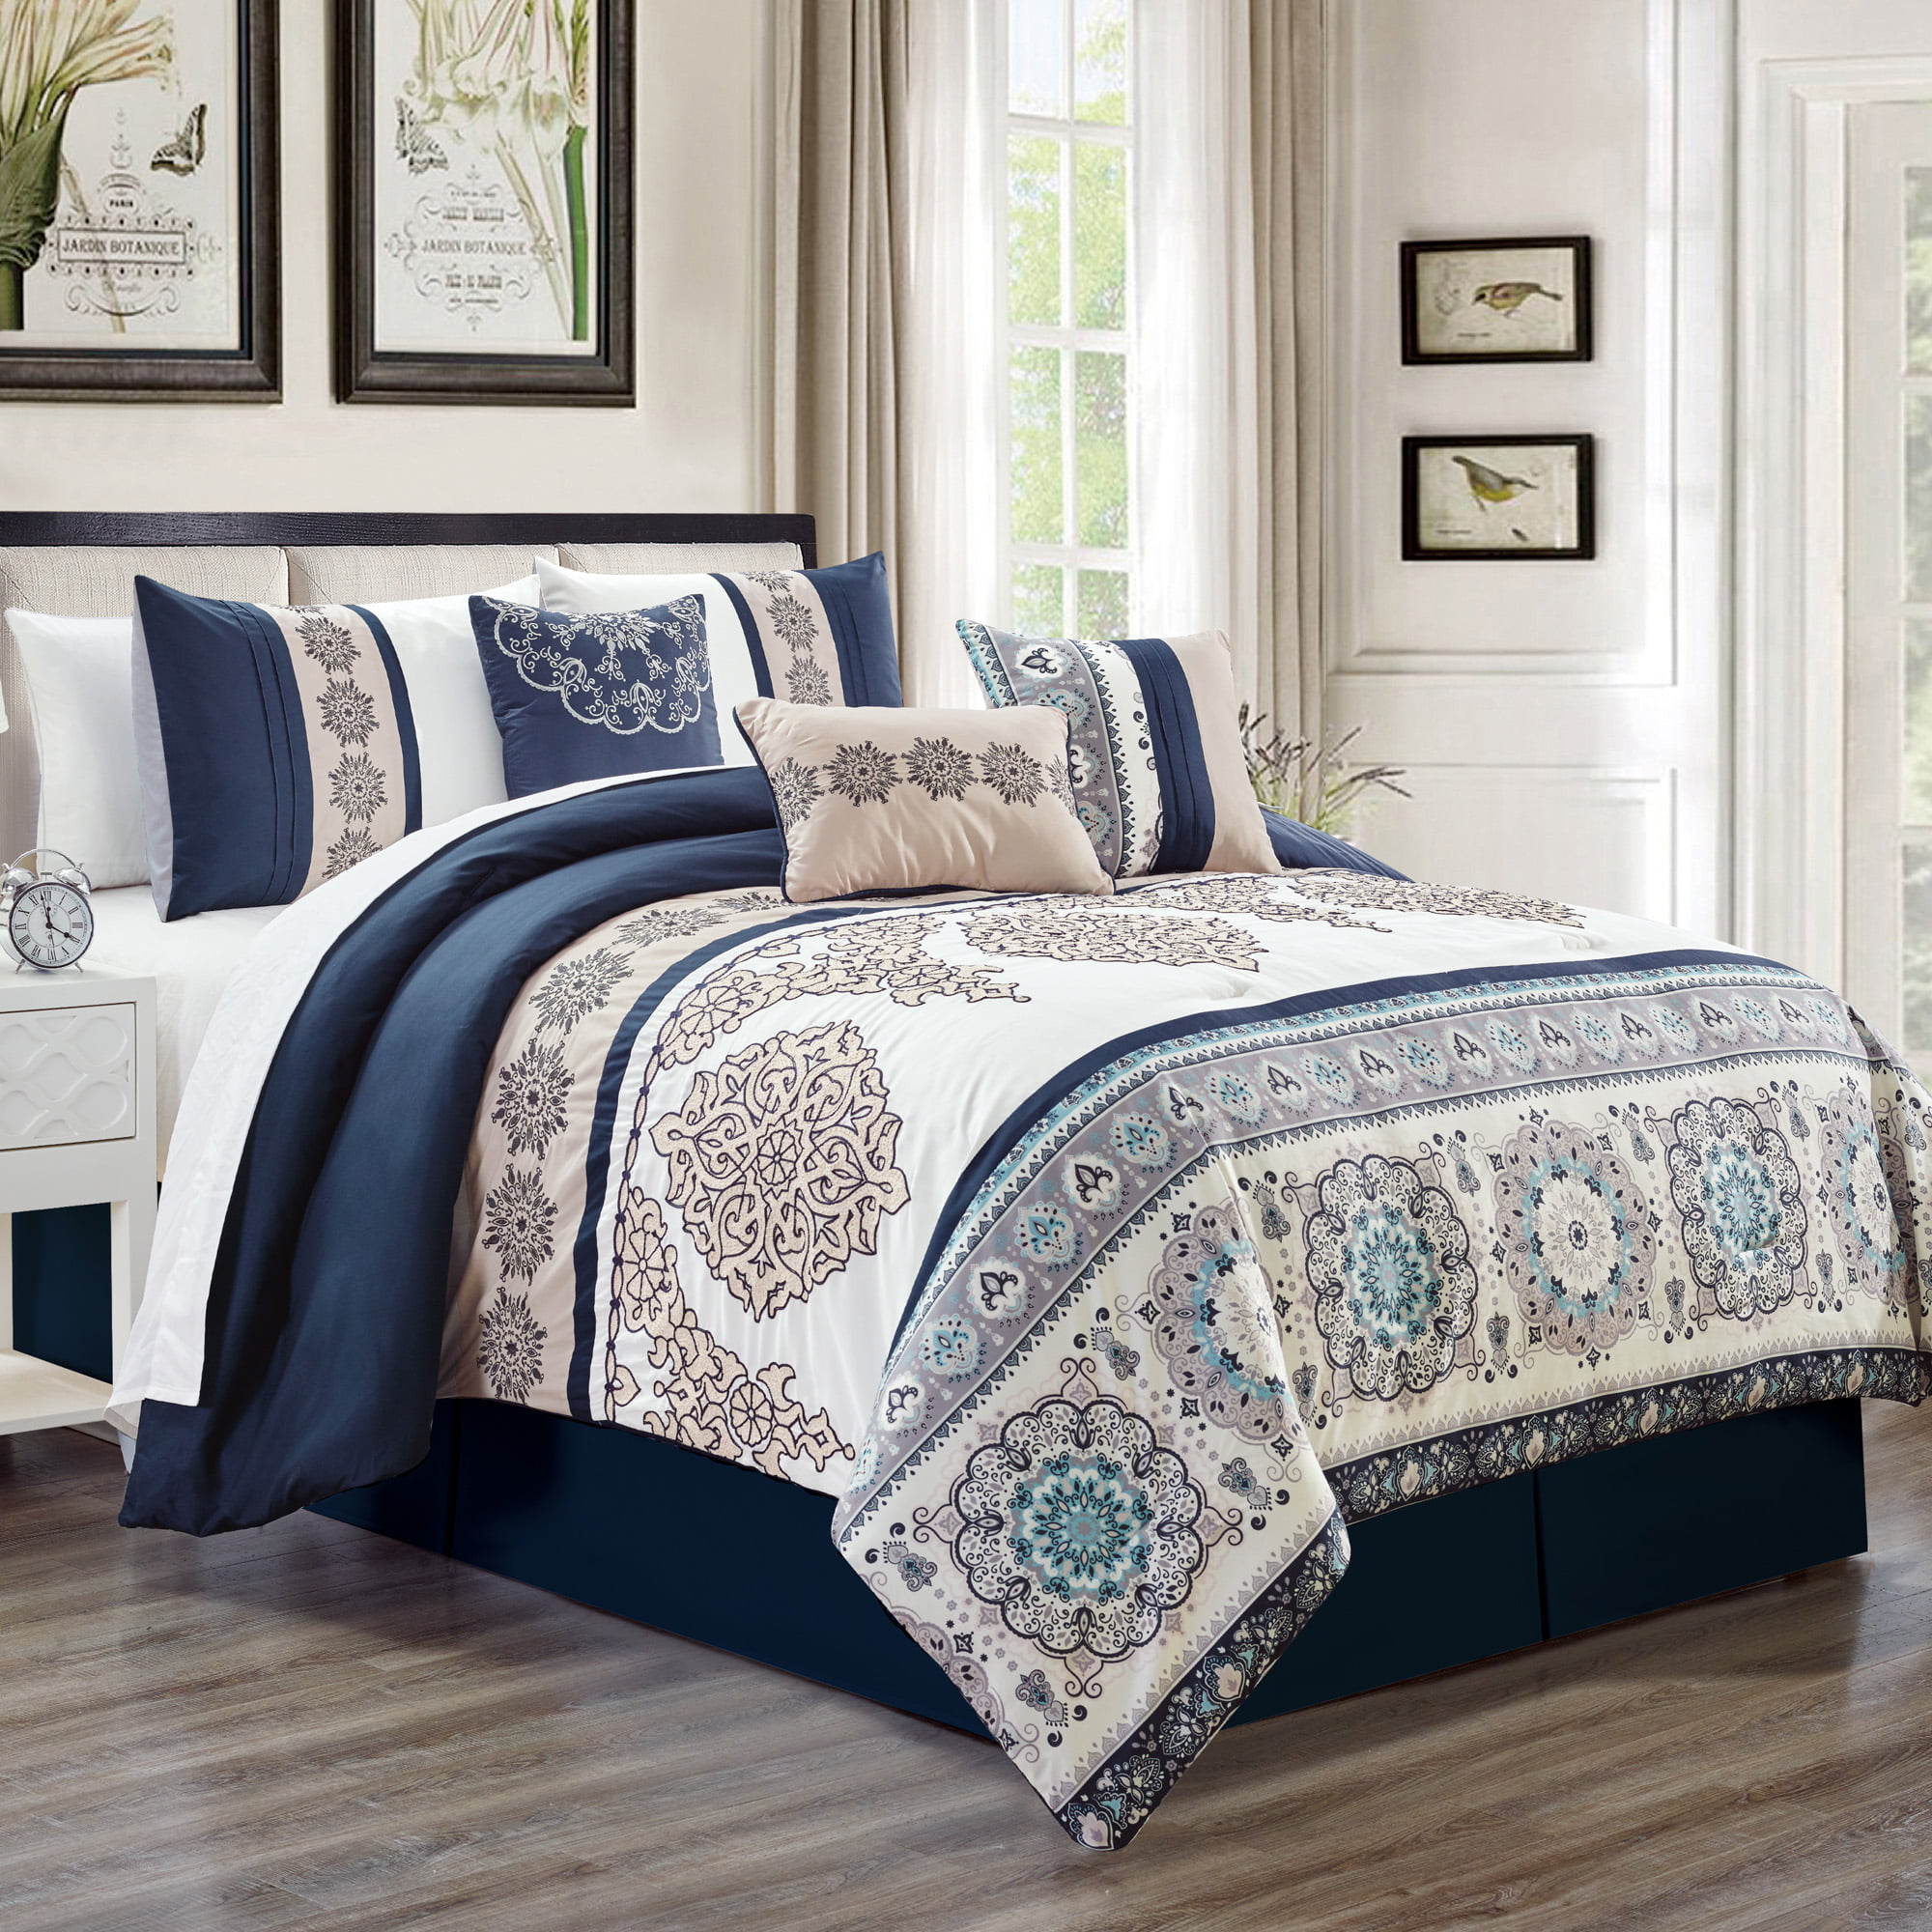 Unique Home Kosta 7 Piece Comforter Set Beige Floral Medallion Bed In a Bag Clearance Bedding